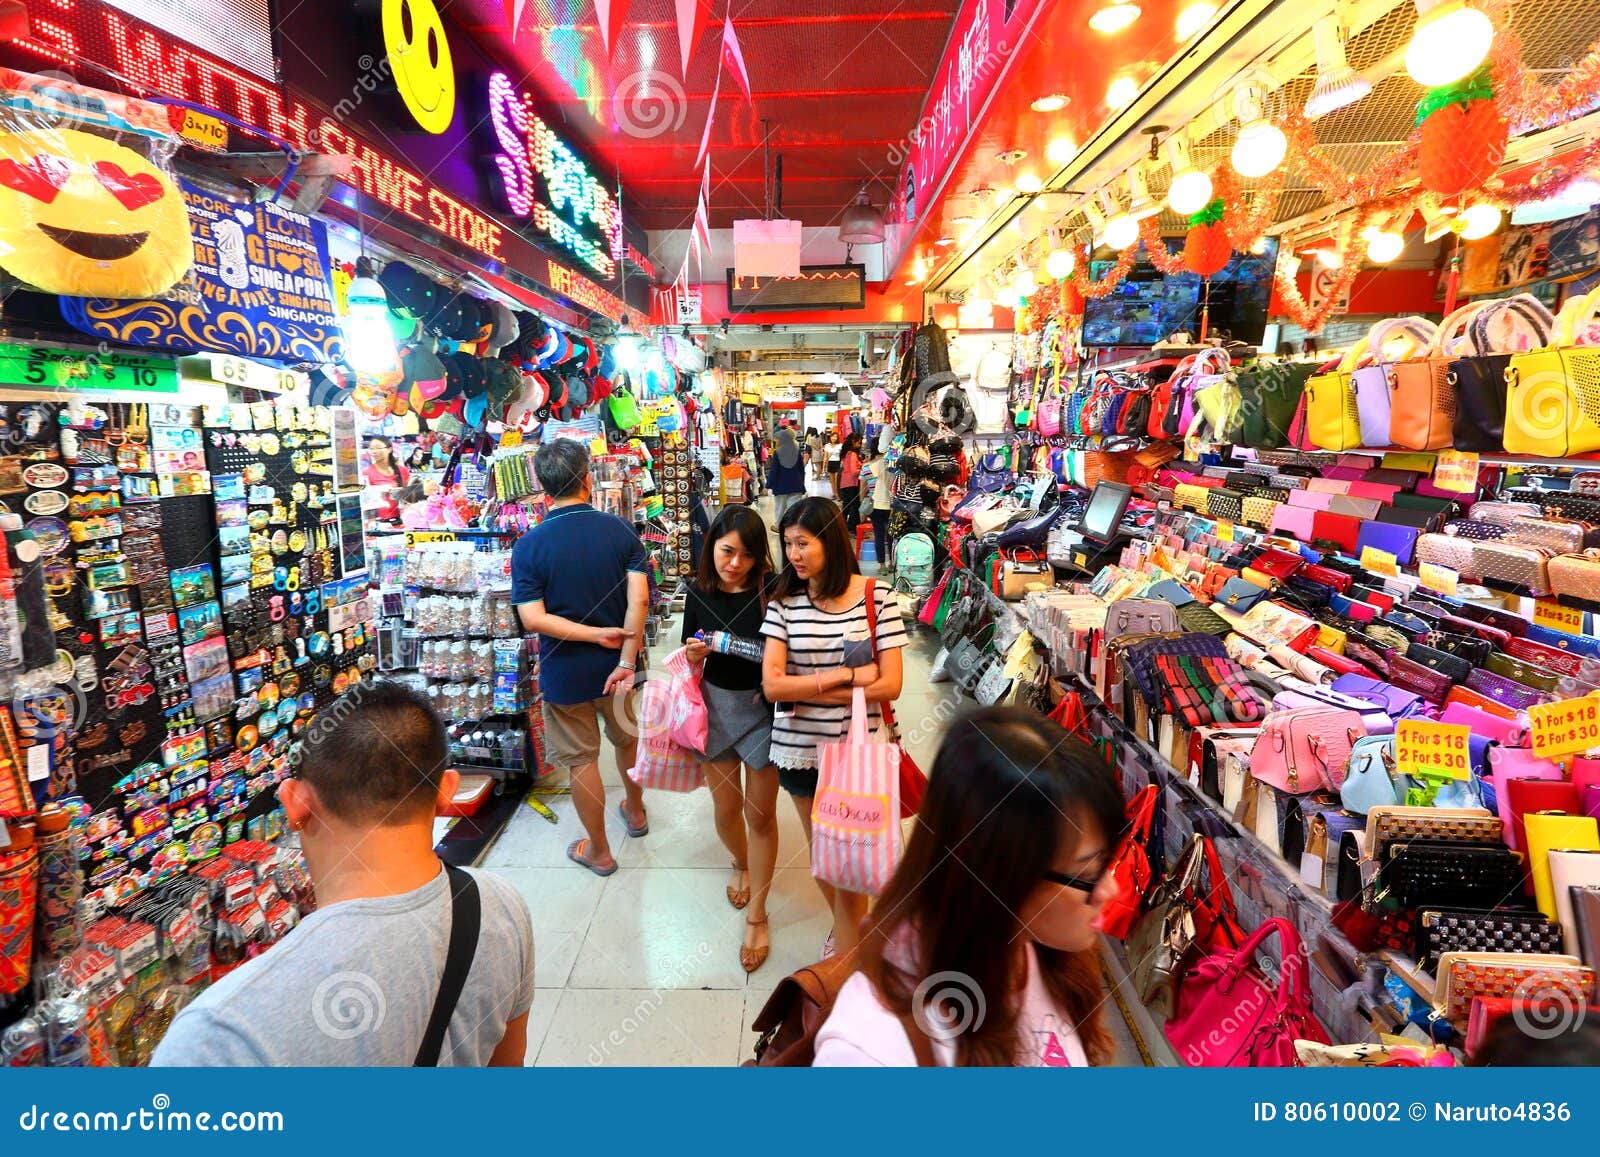 Singapore: Bugis street market